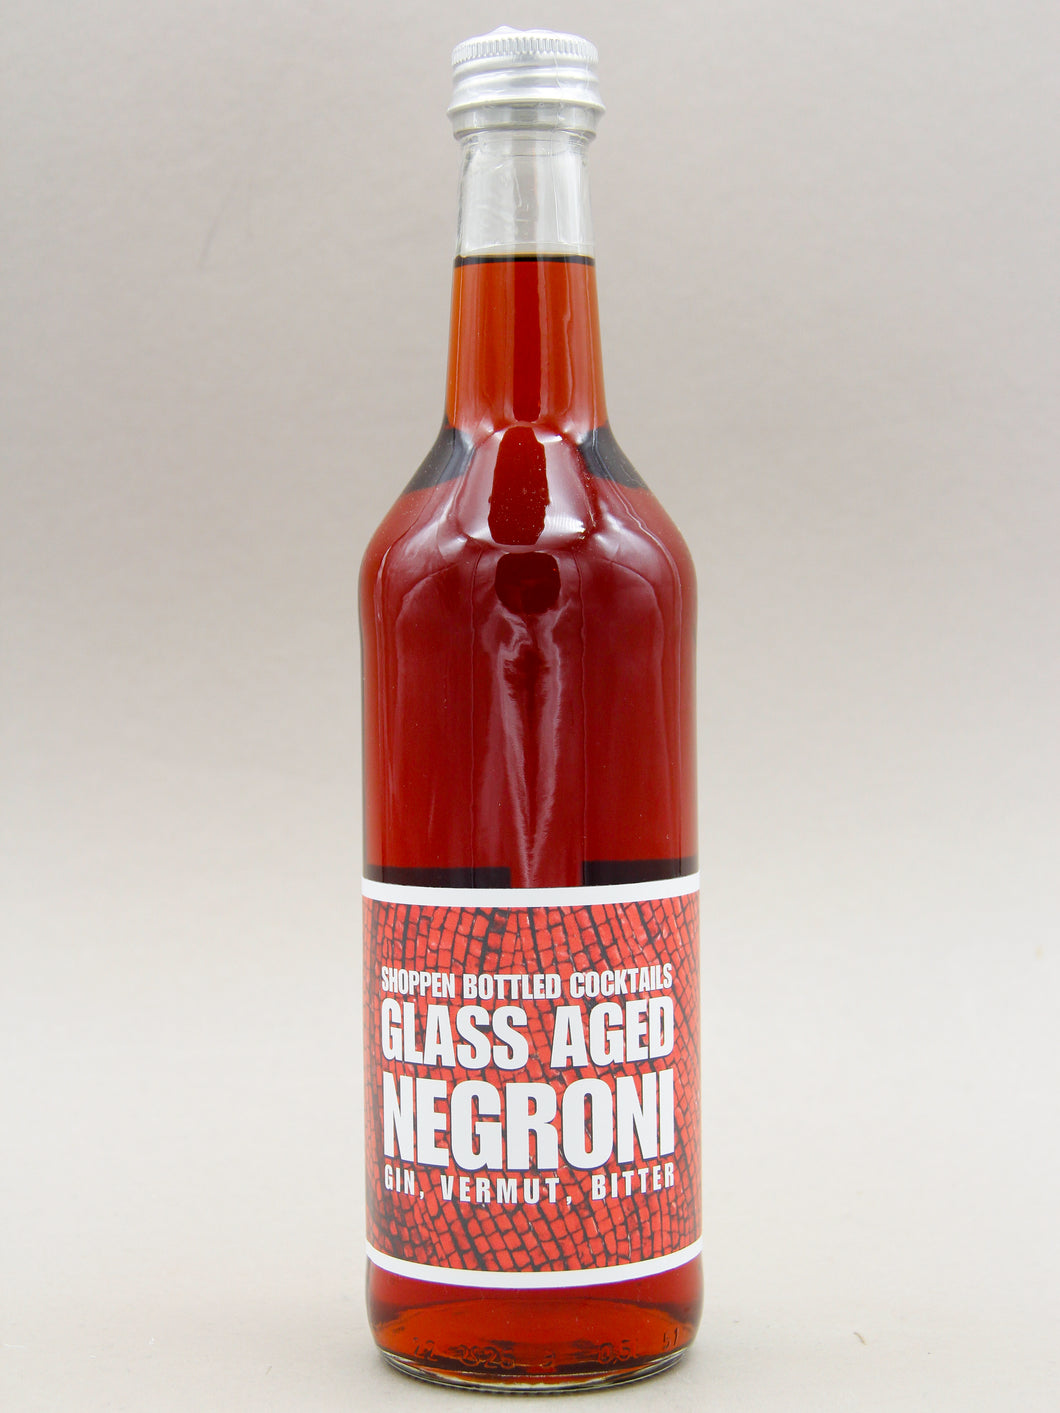 Shoppen Bottled Cocktails, Glass Aged Negroni (28%, 50cl)